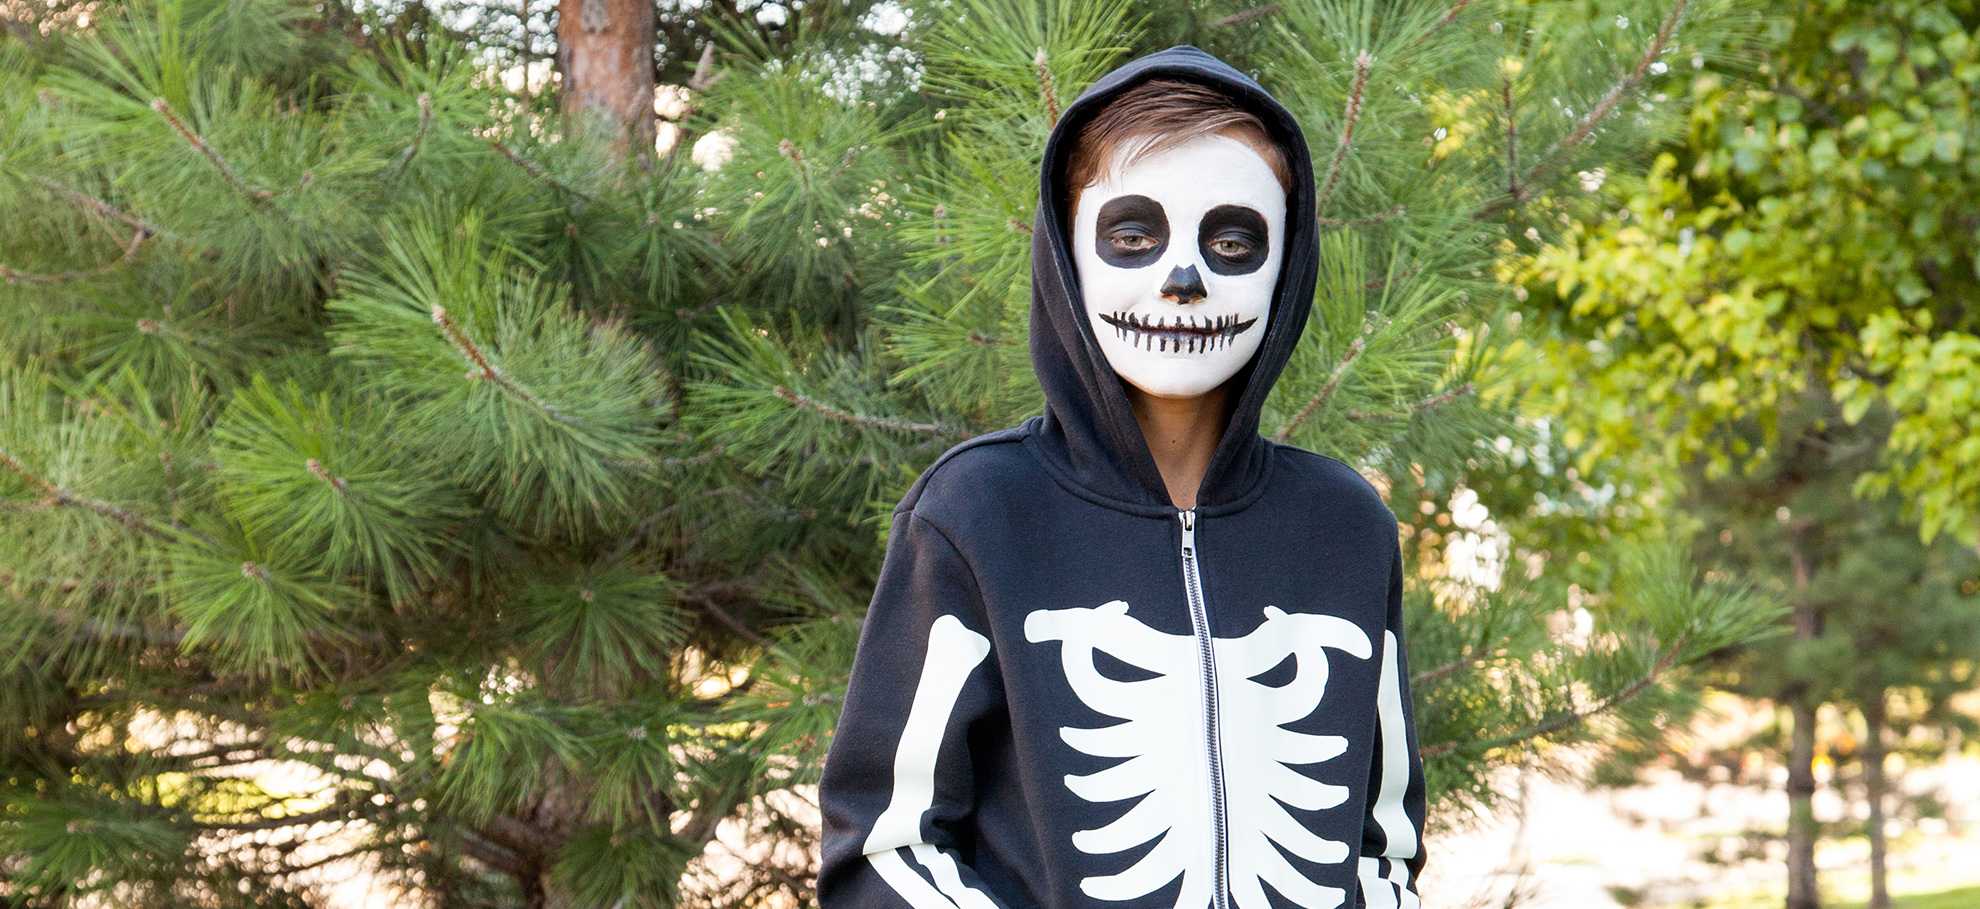 young boy wearing skeleton costume